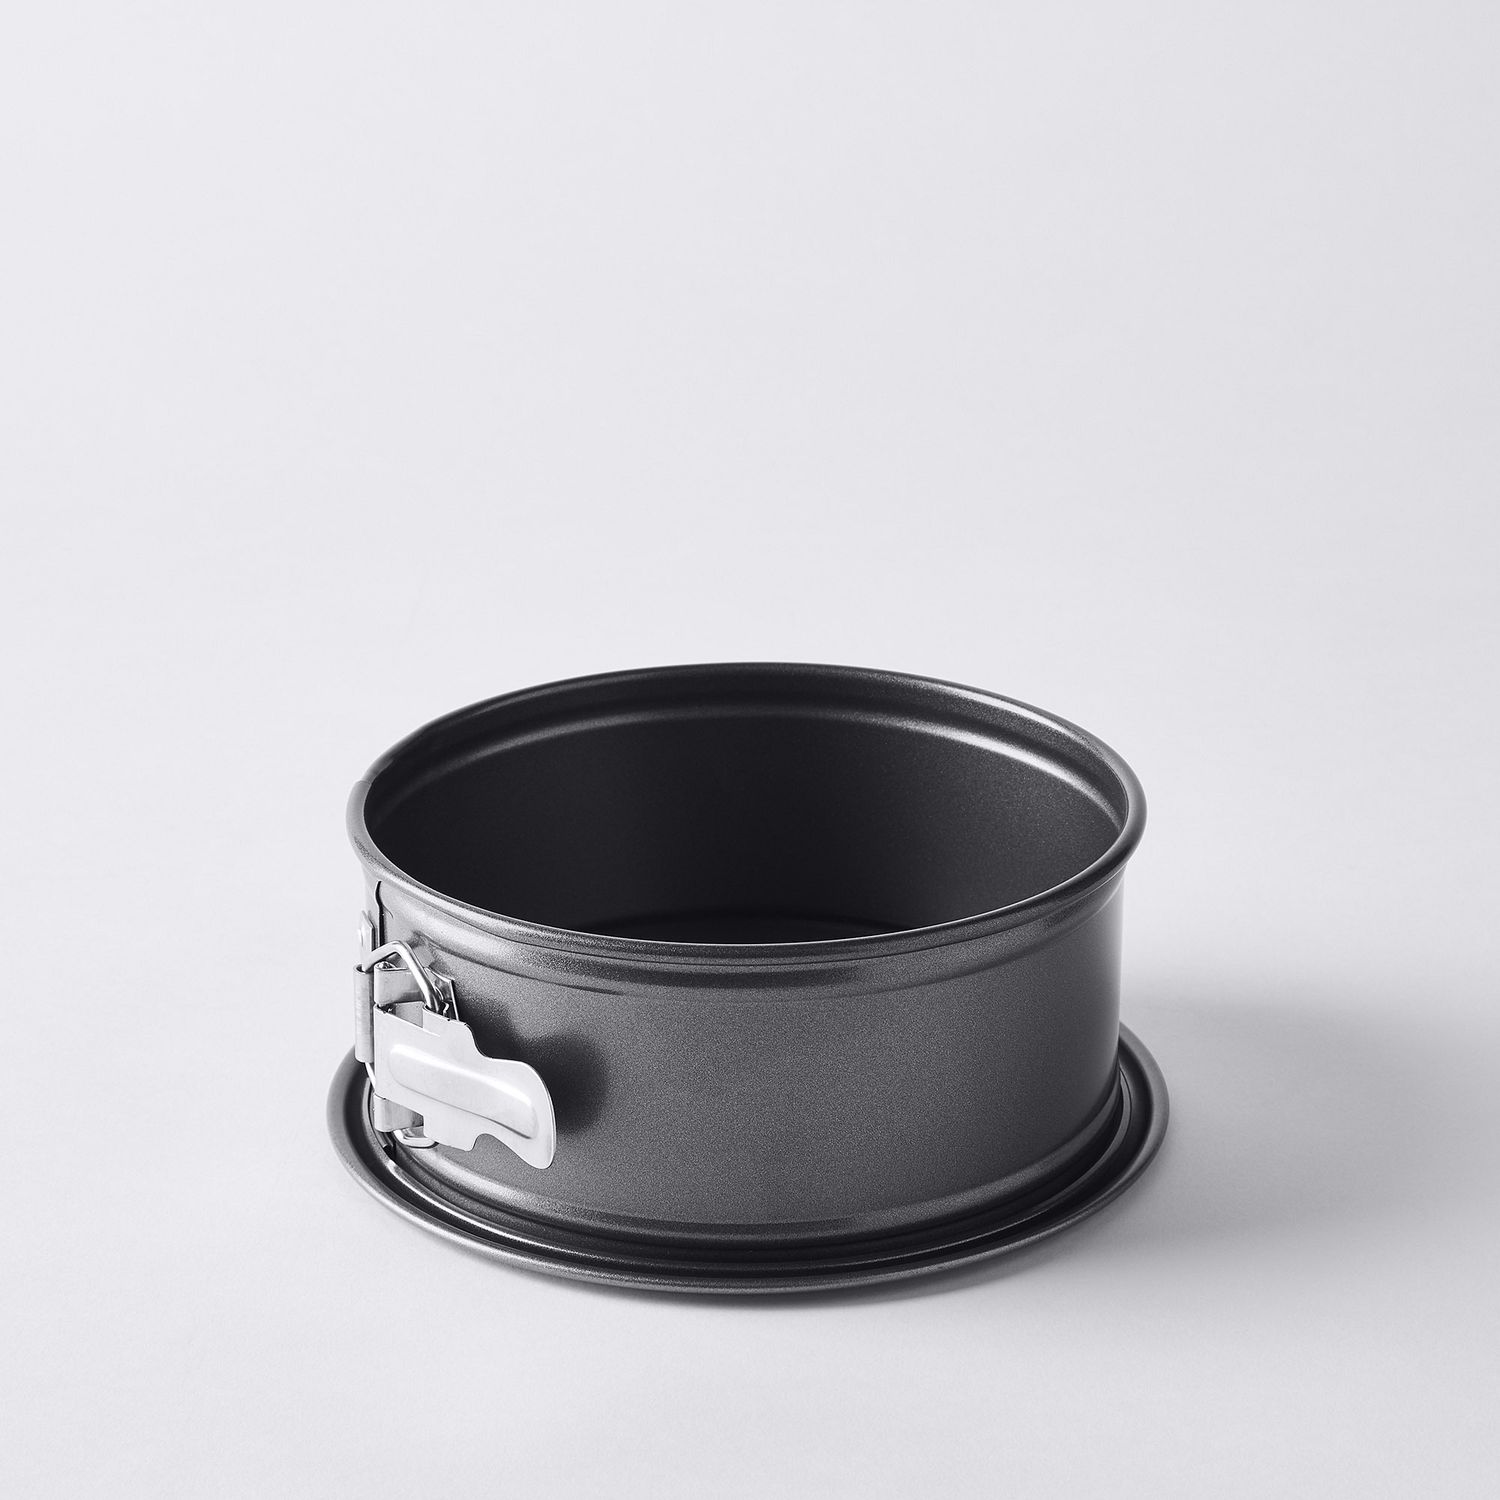 Nordic Ware Springform Pan, 7-Inch & 9-Inch, Carbon Steel